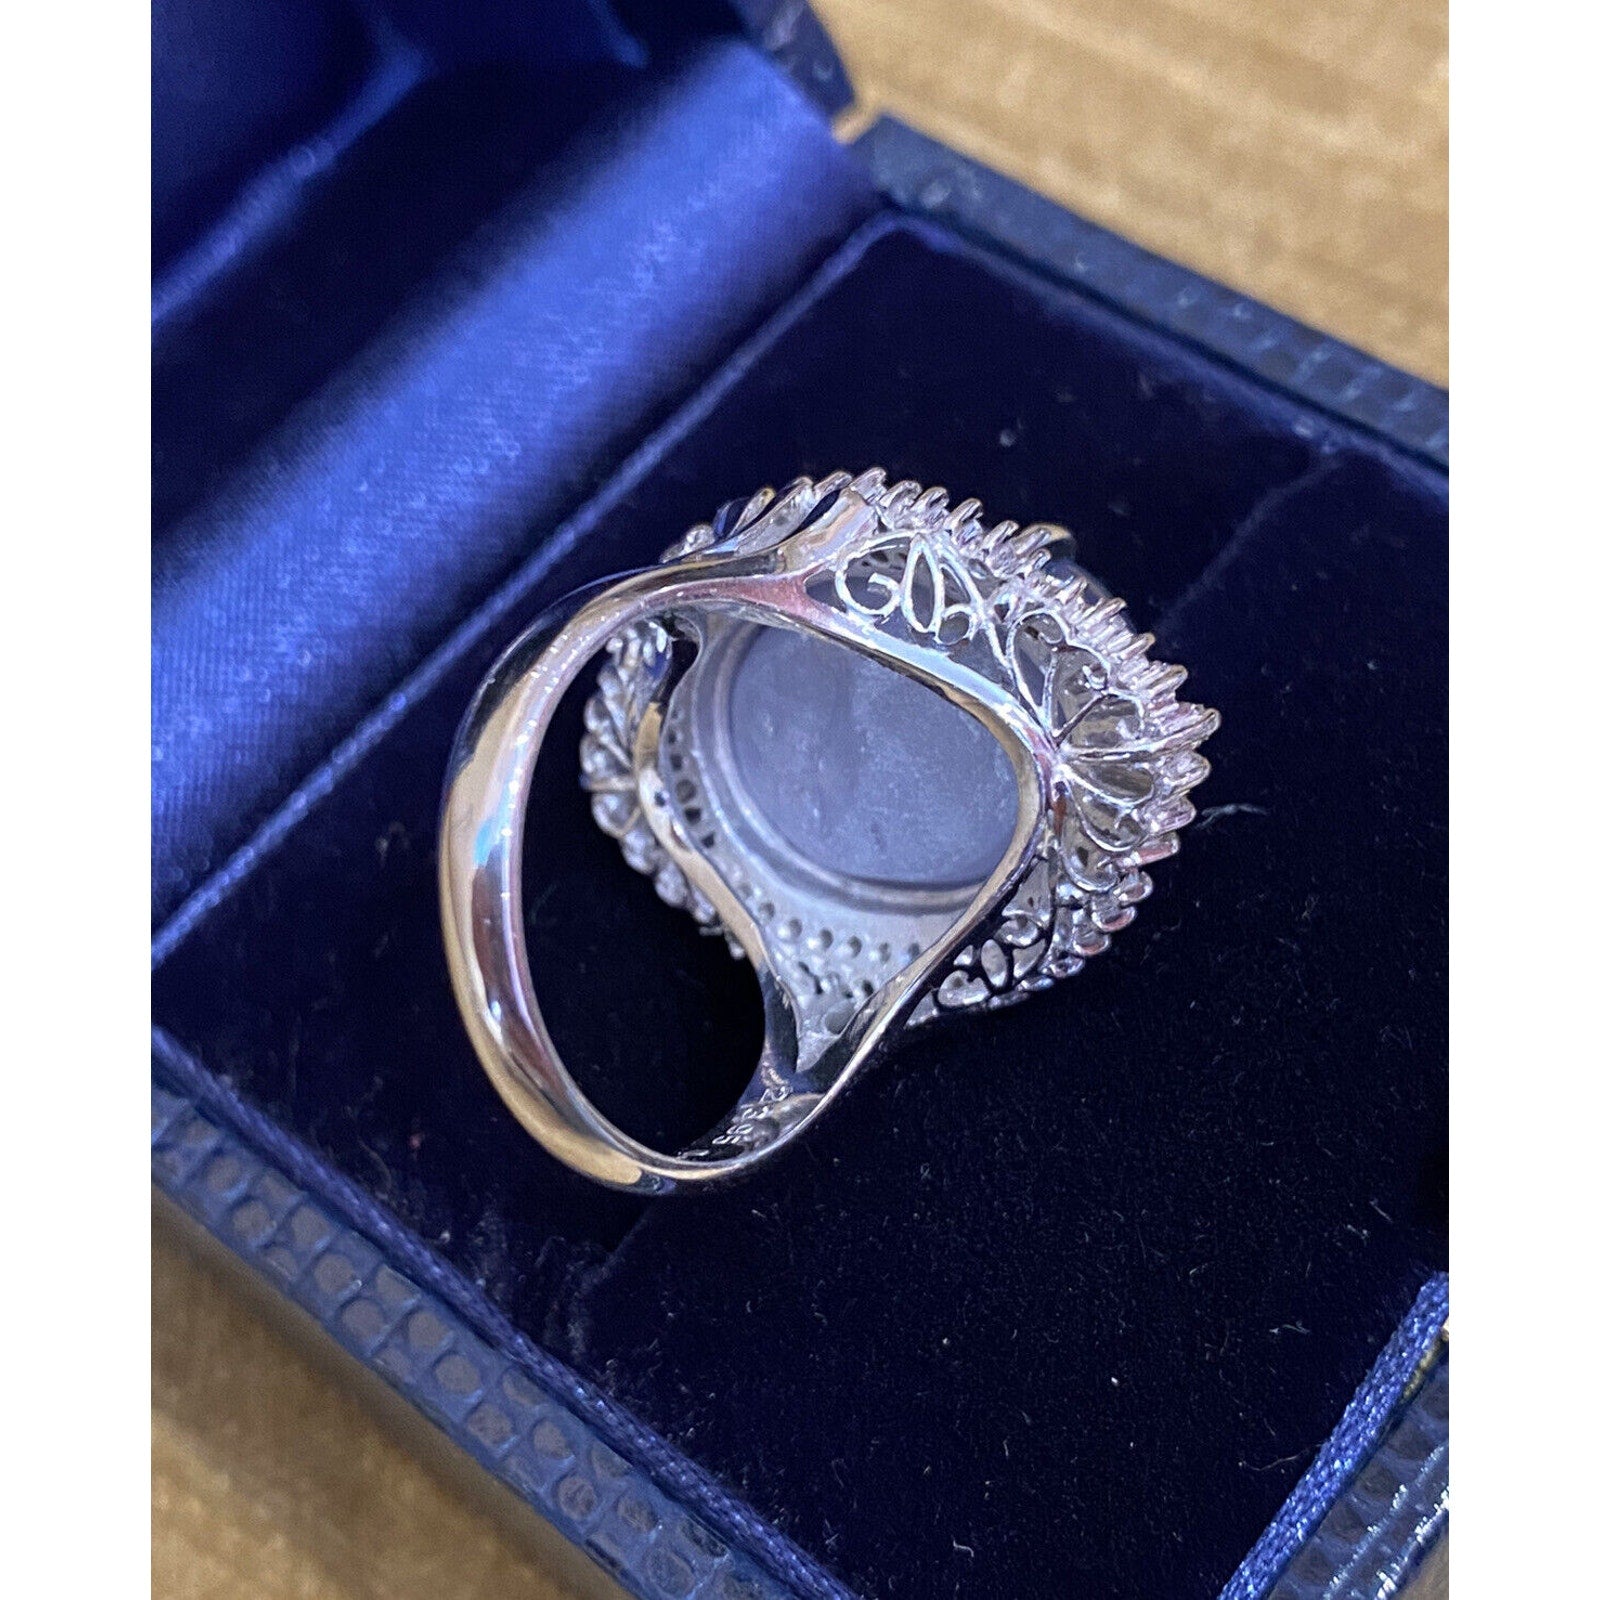 Large 23.95cts Oval Star Sapphire & Diamond Ballerina Ring in Platinum -HM2336AE